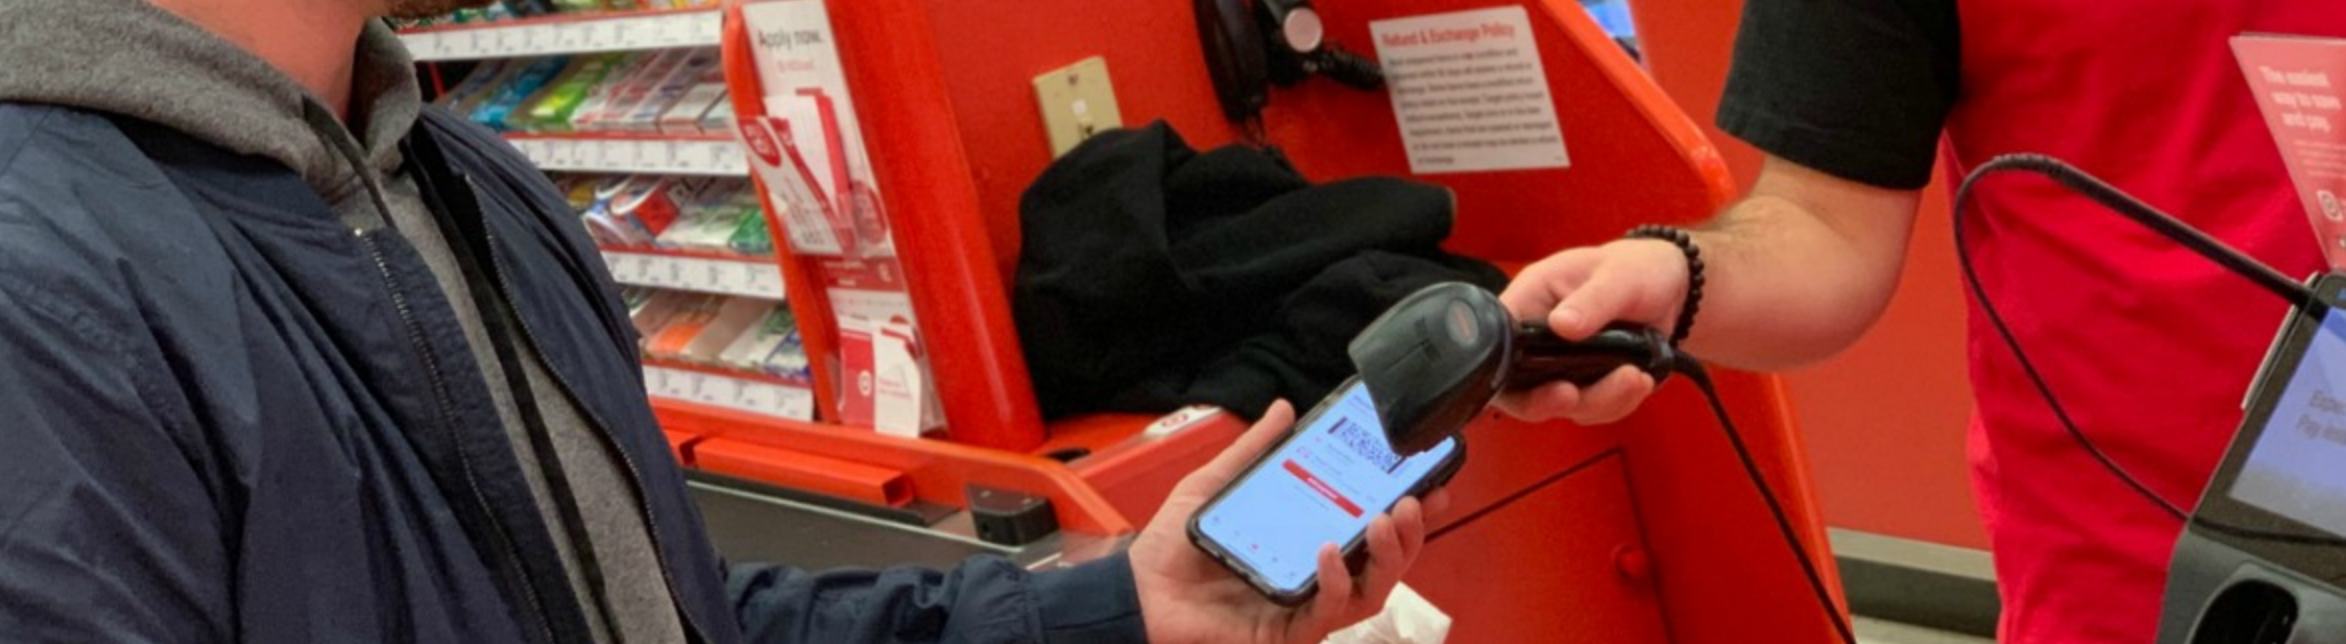 scanning Target circle offer on phone 